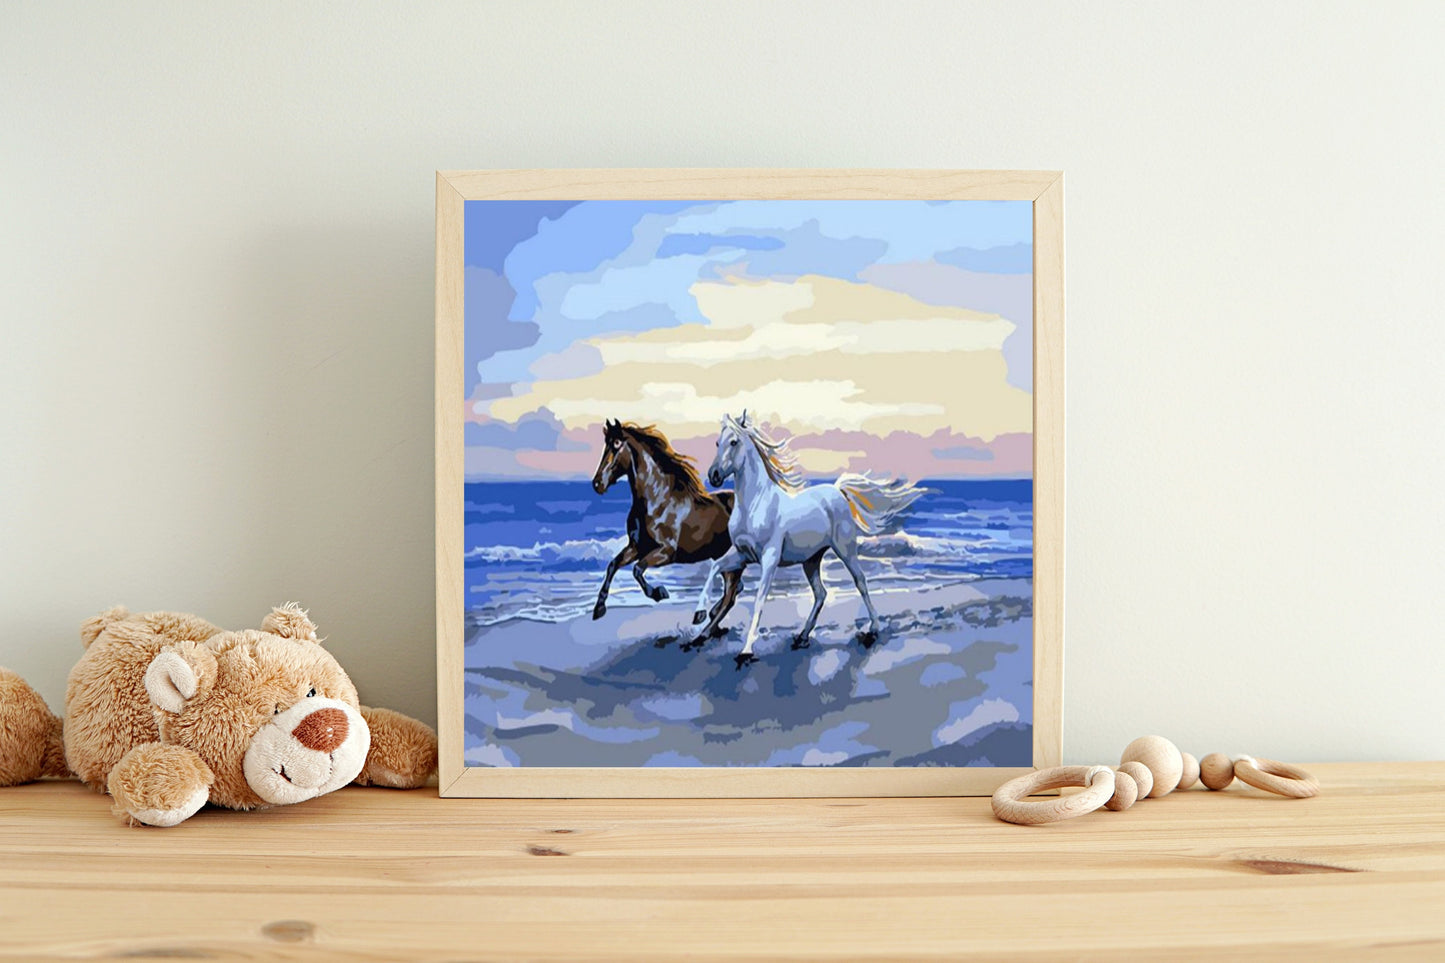 Malen nach Zahlen Erwachsene Pferde am Strand 40x50 cm Paint by Numbers DIY Öl Acryl Leinwand Bild Dekoration Horses Beach ohne Rahmen